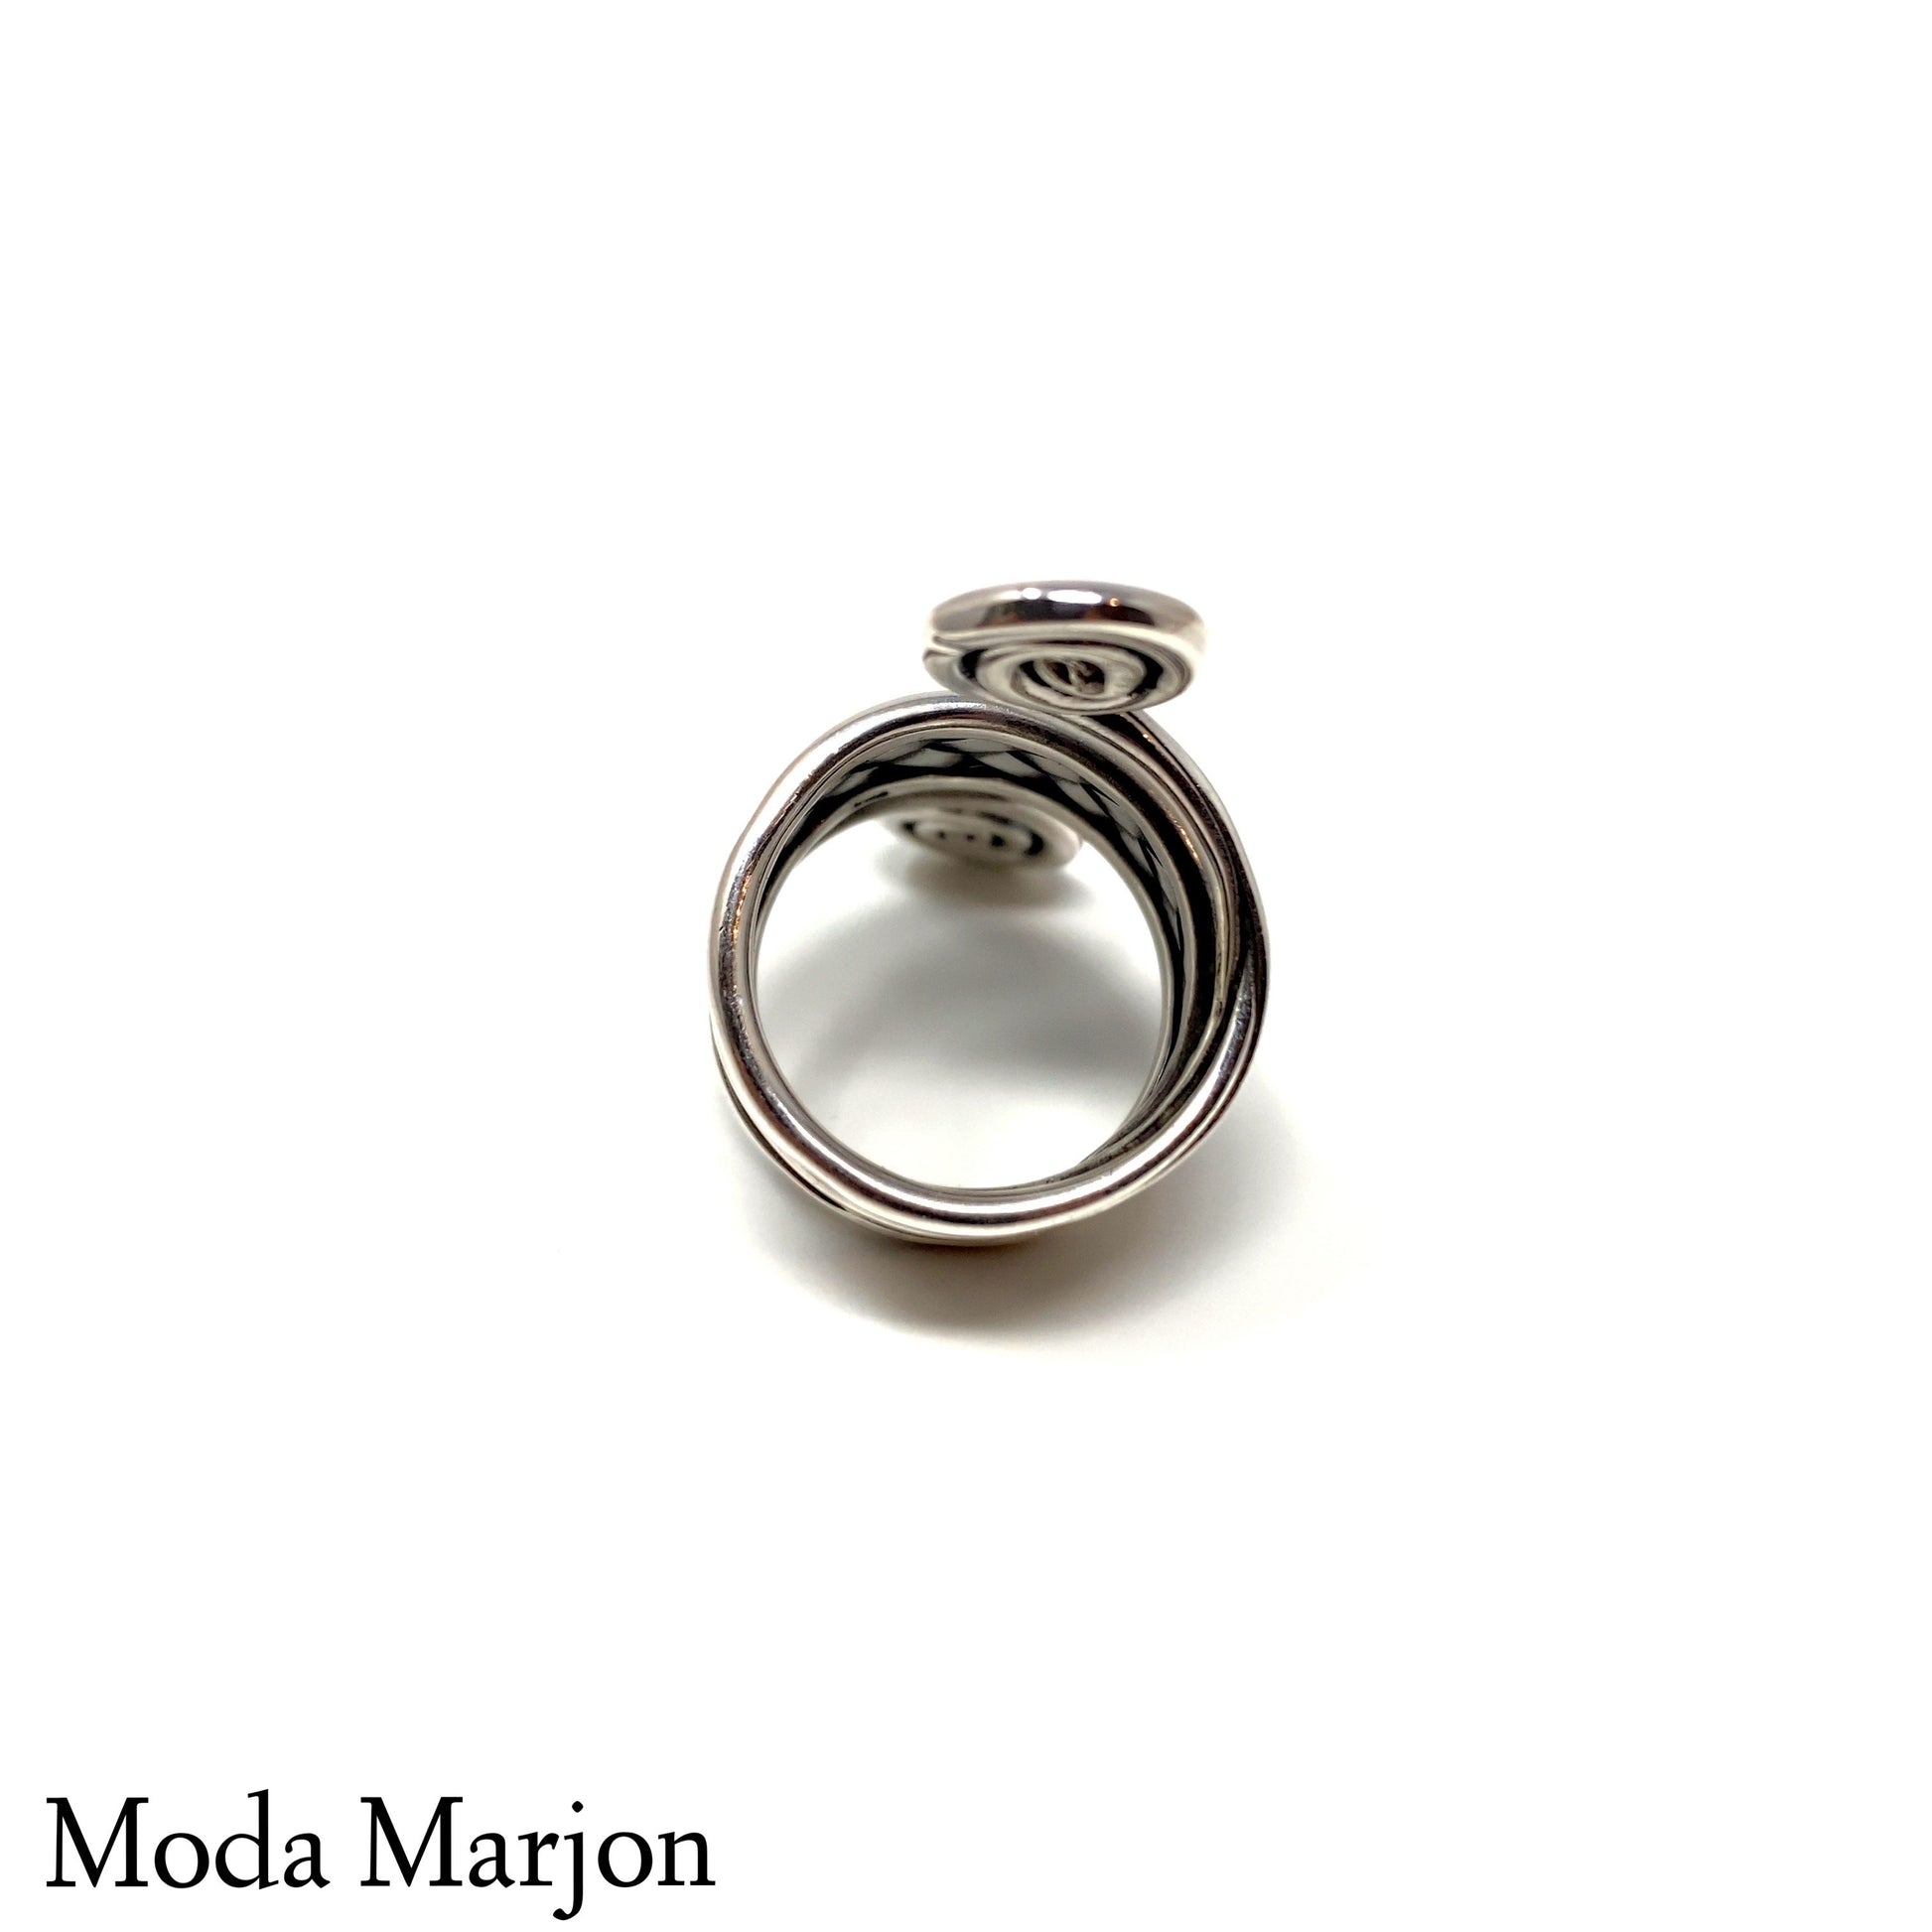 Oversized Woven Silver Ring - Moda Marjon 